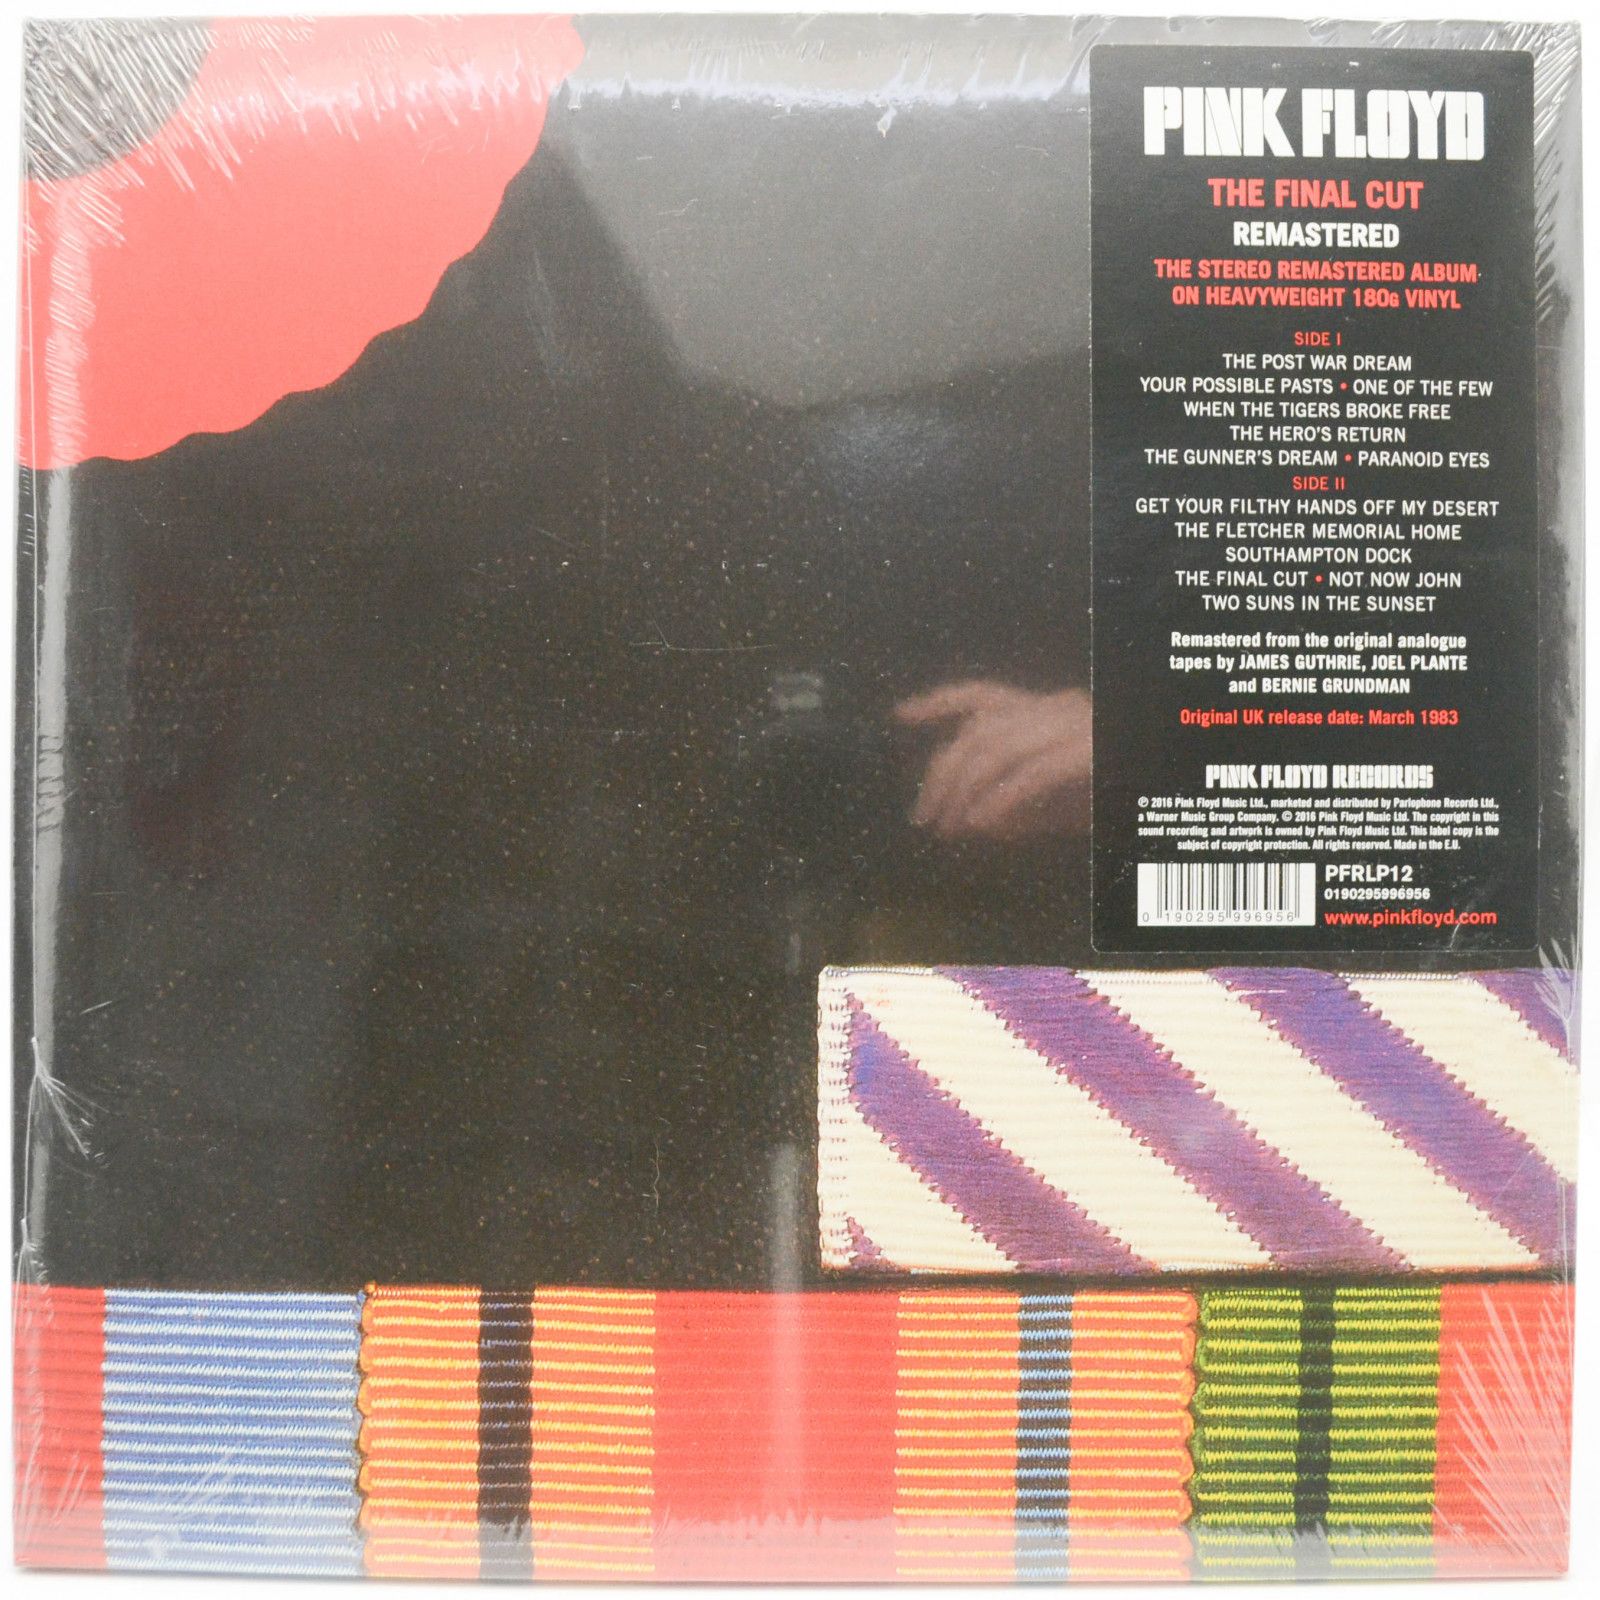 Pink Floyd — The Final Cut, 1982